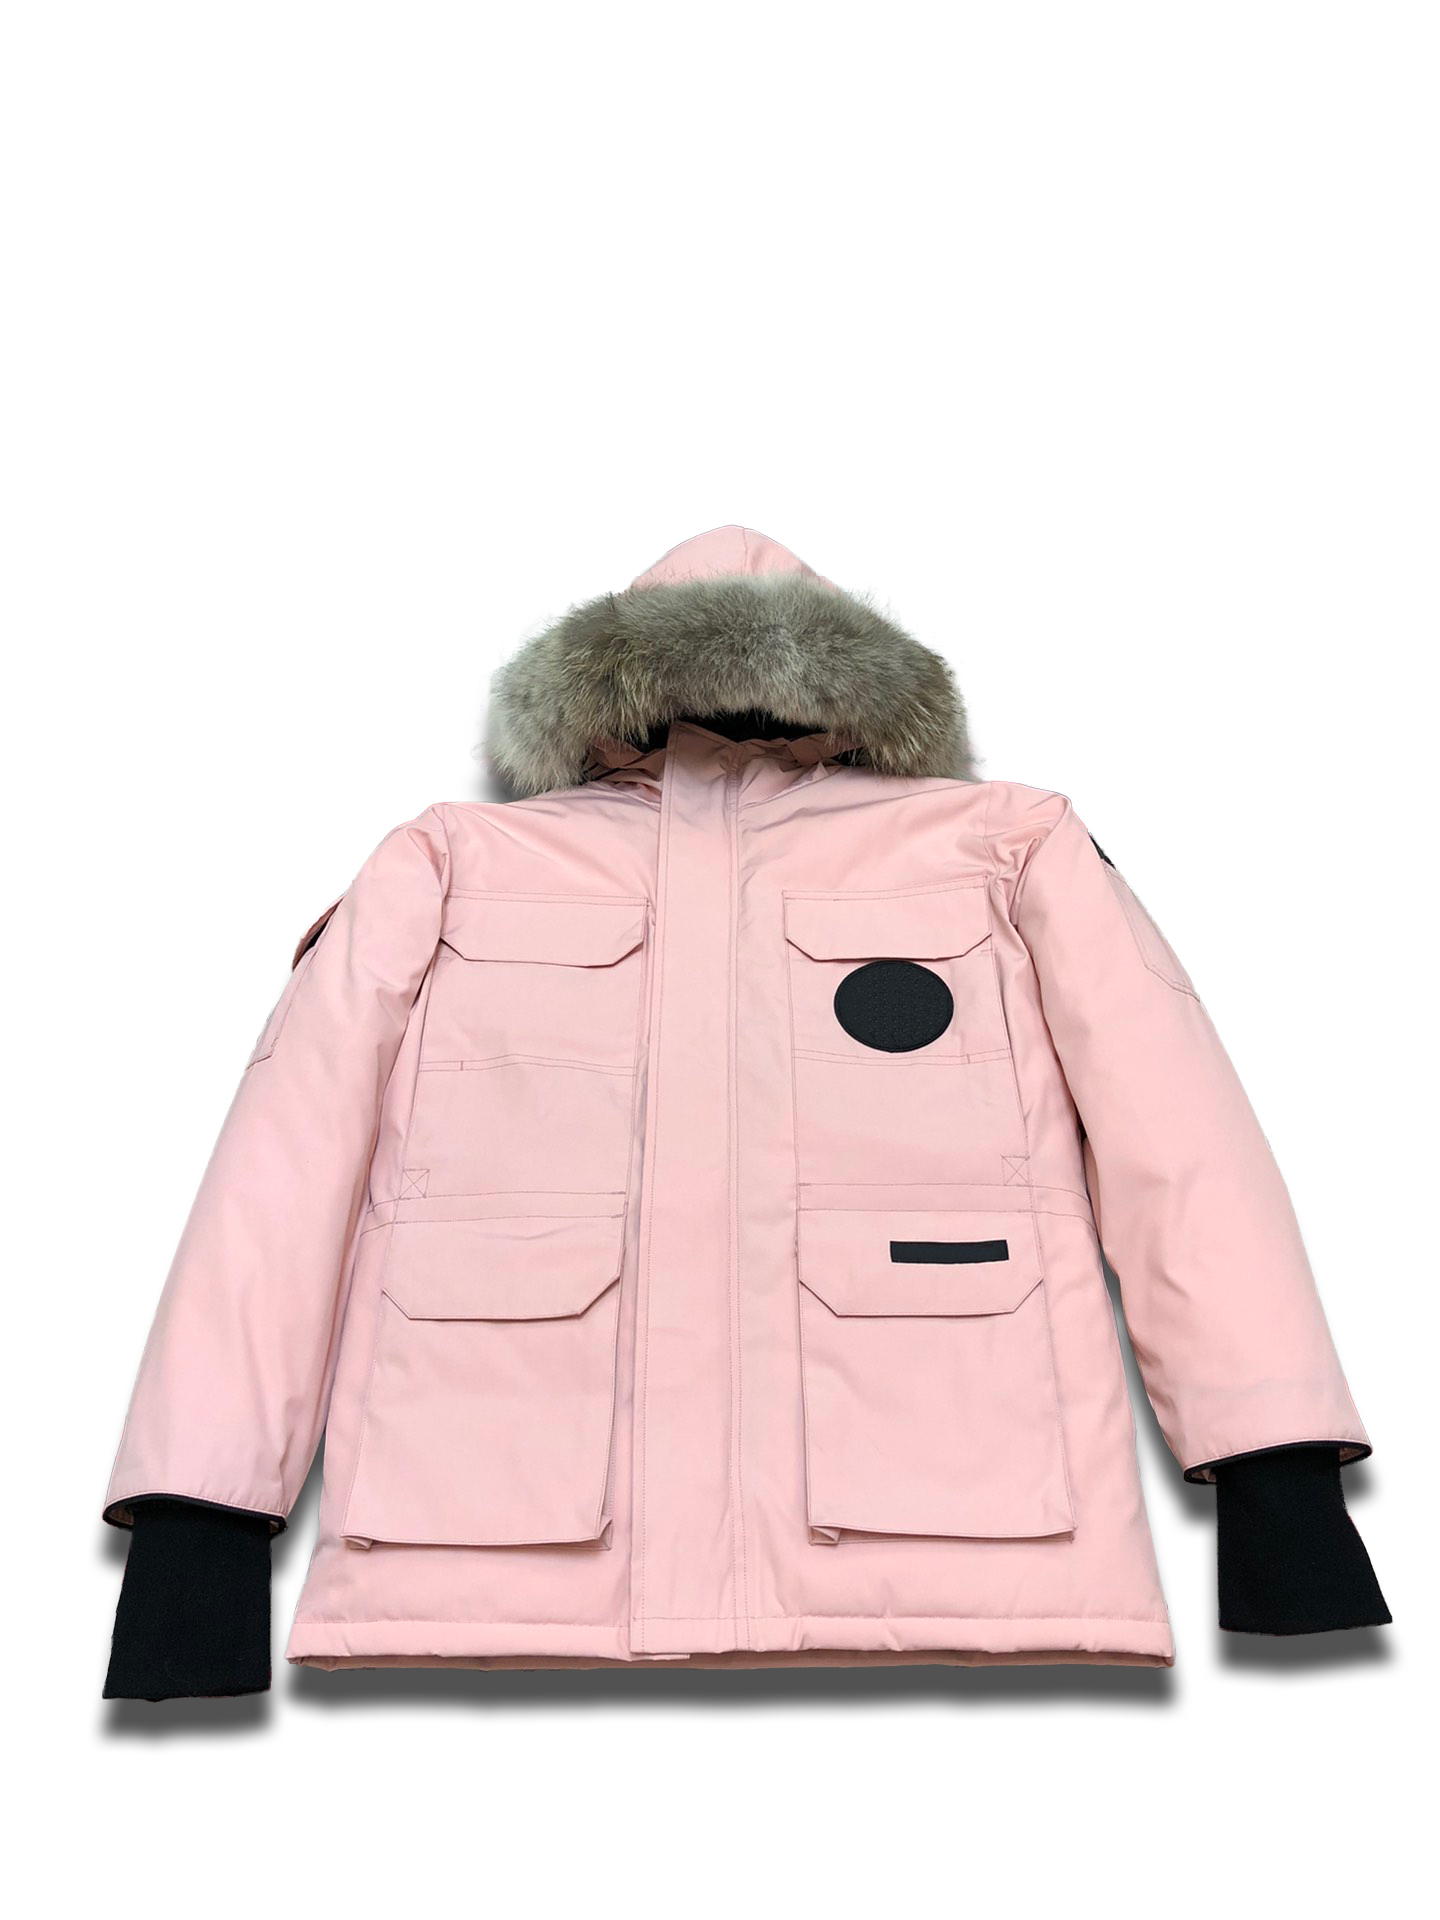 Mens Down Jackets waterproof Stylist Coat Parka Mens Woman Thick Coat Classic Keep Warm Brand Jacket Winter Sports Parkas EU size XS-2XL AAA